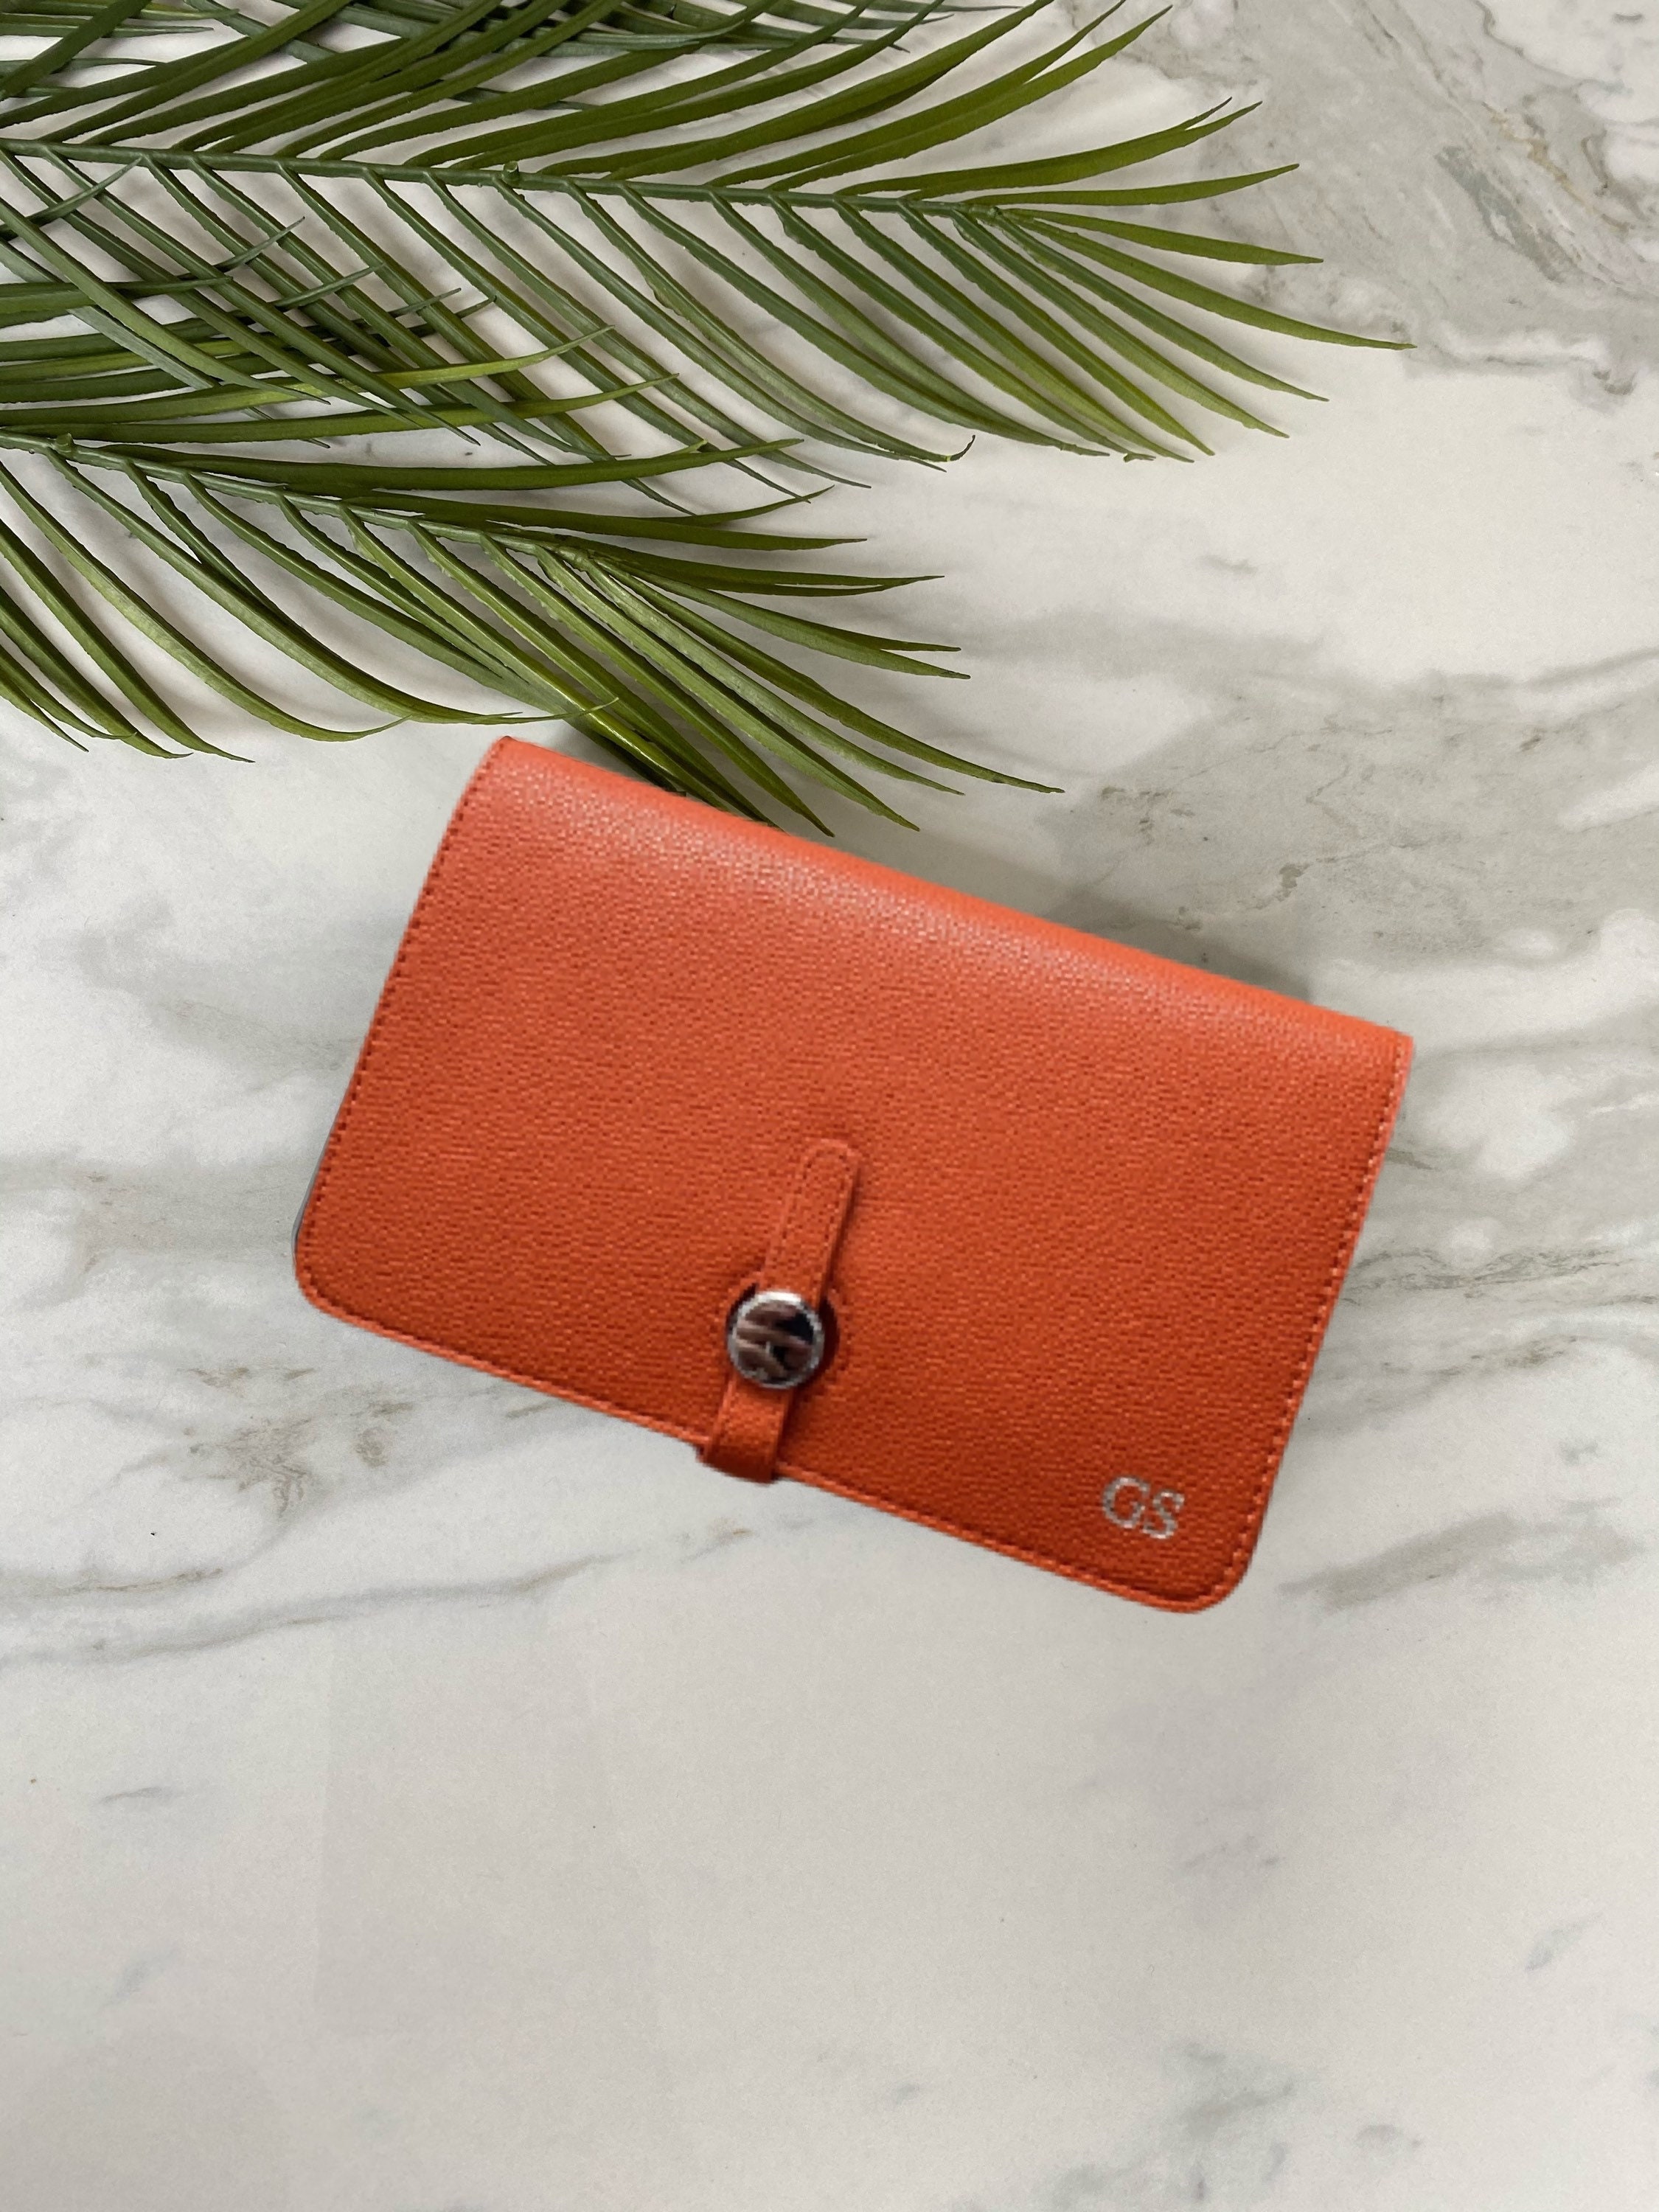 Hermès Dogon Compact Wallet - Orange Wallets, Accessories